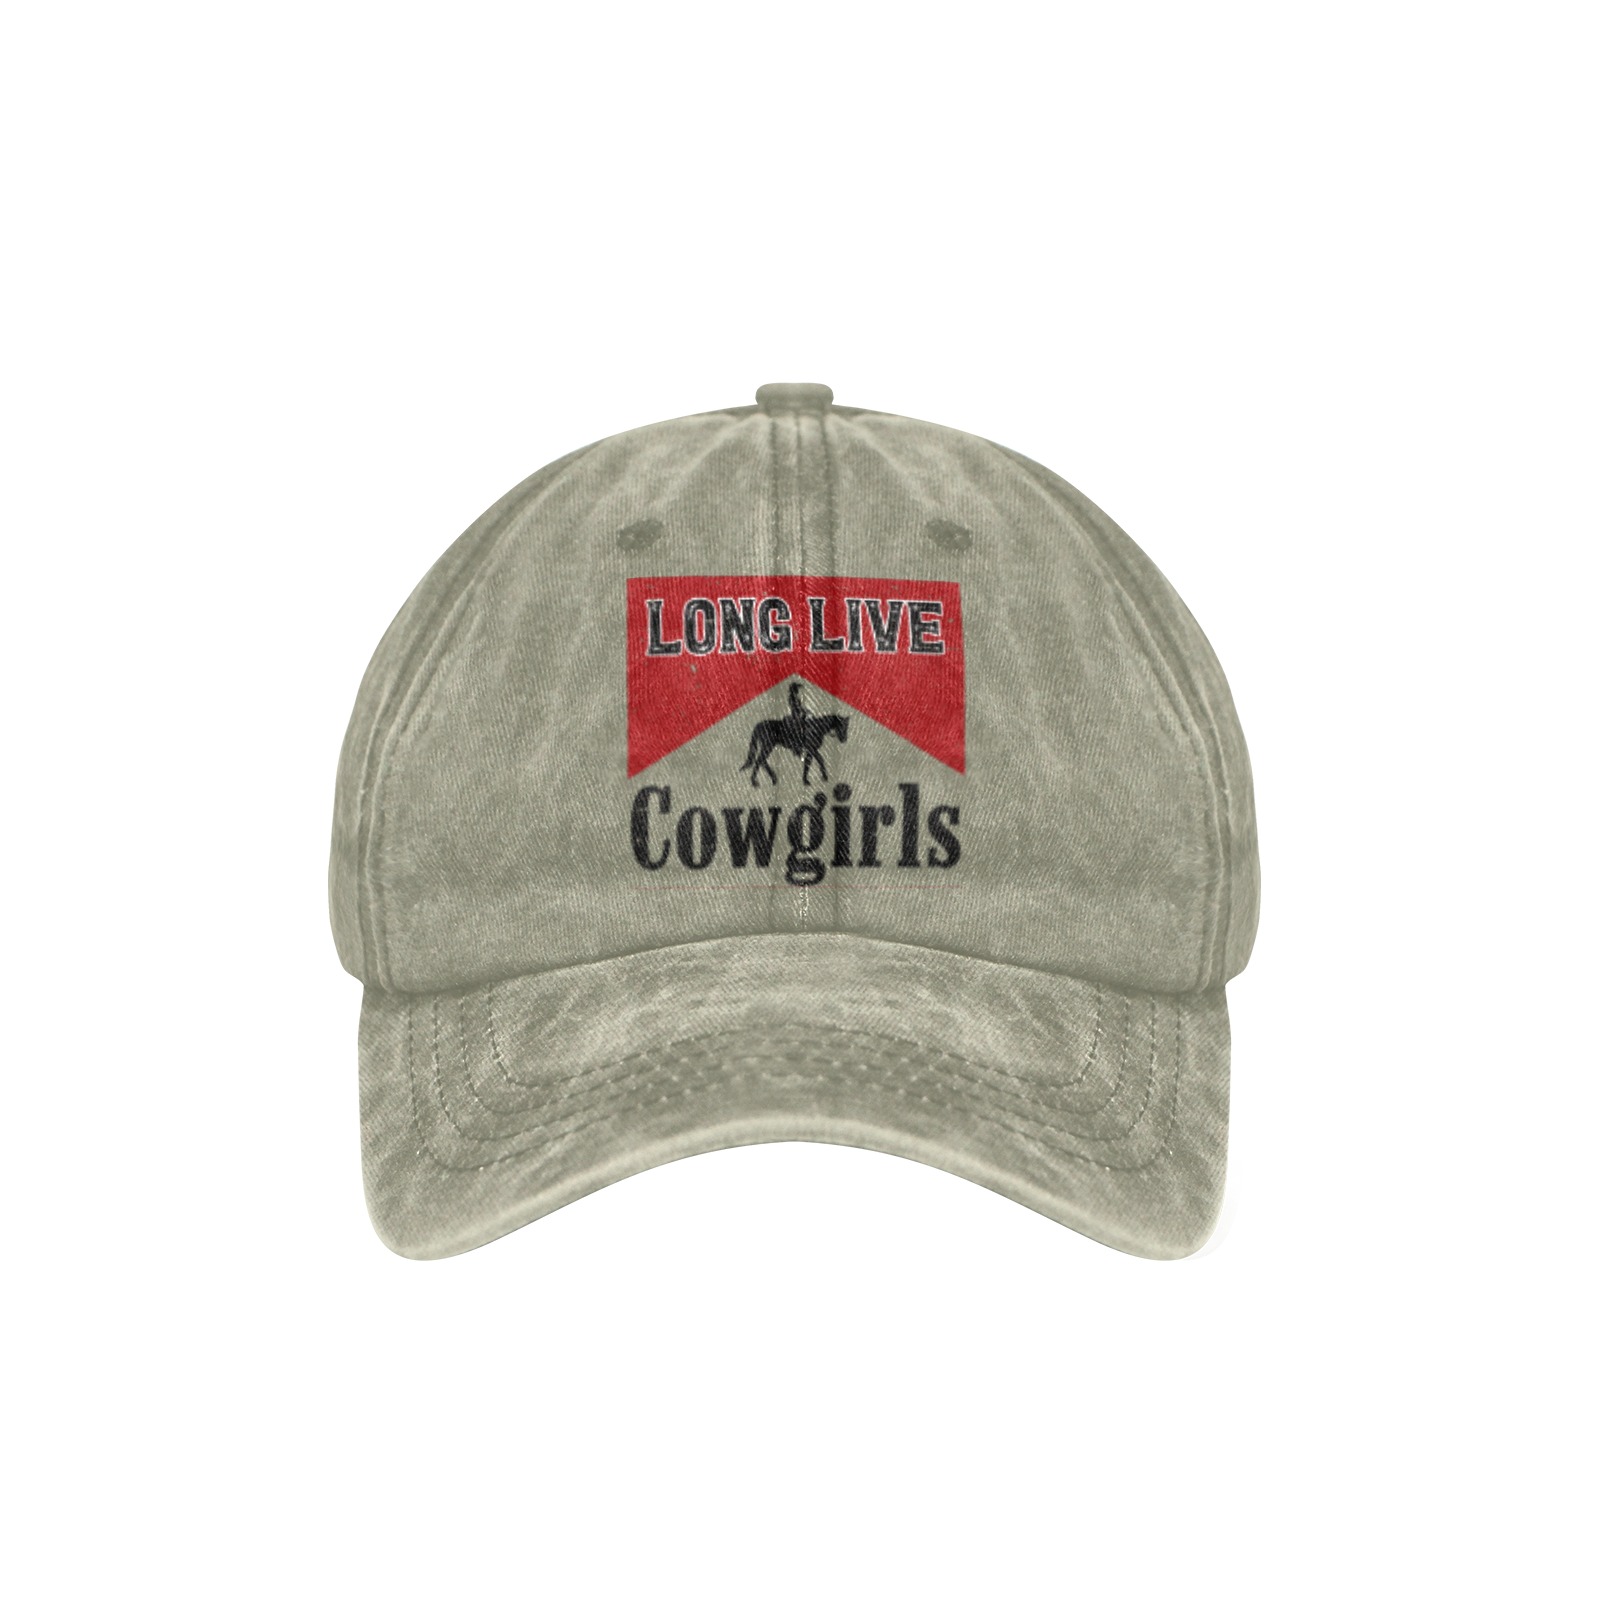 Long Live Cowgirls (AG) Denim Cap